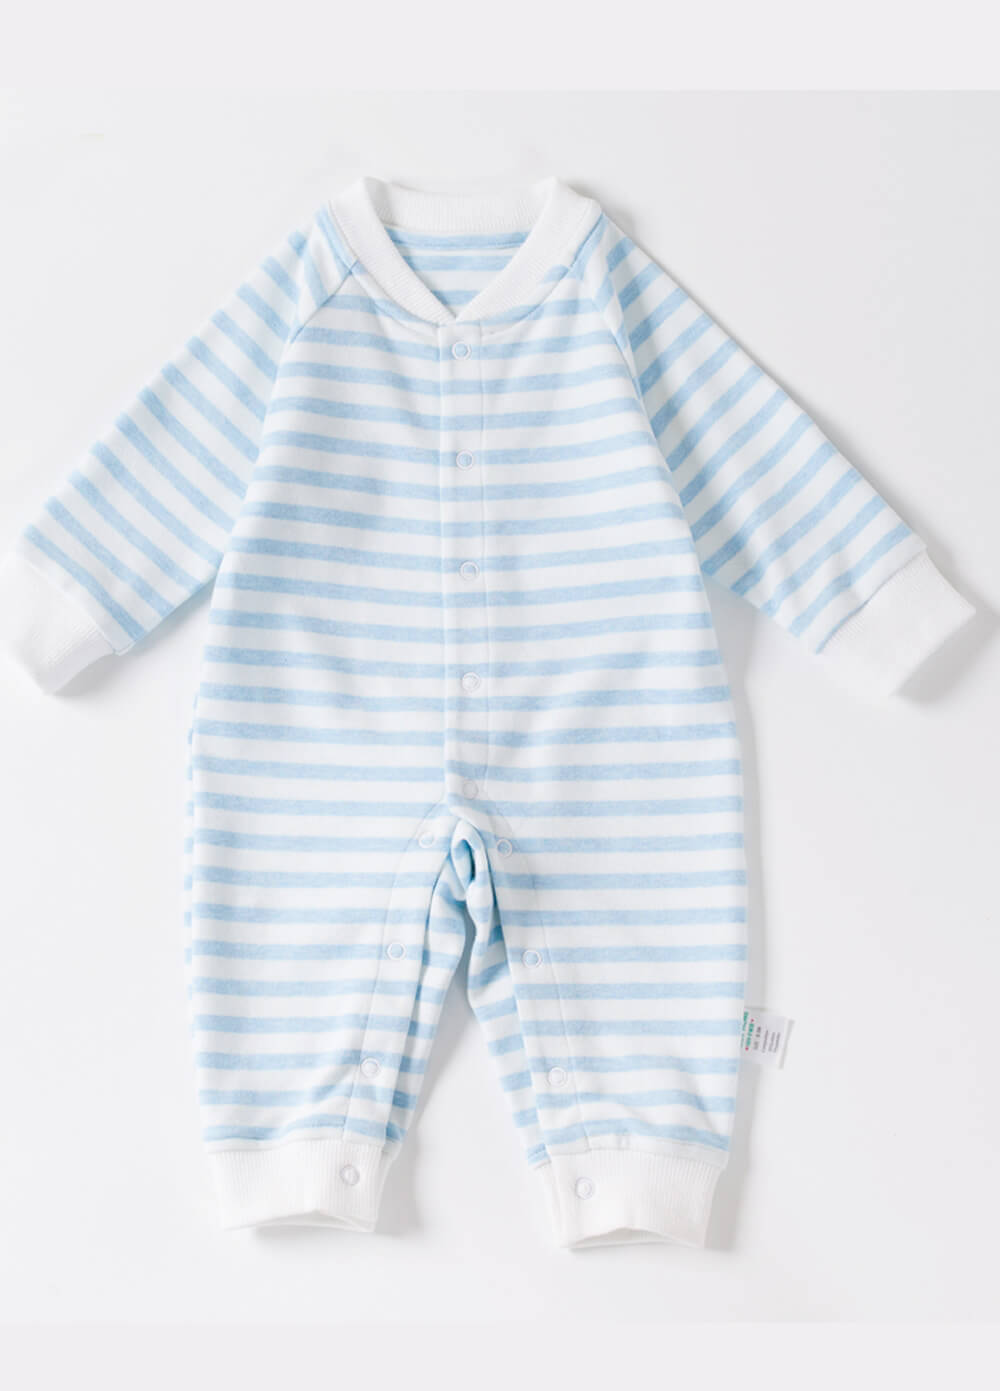 Queen Bee Lille Newborn Baby Onesie in Blue Stripes from Lait & Co